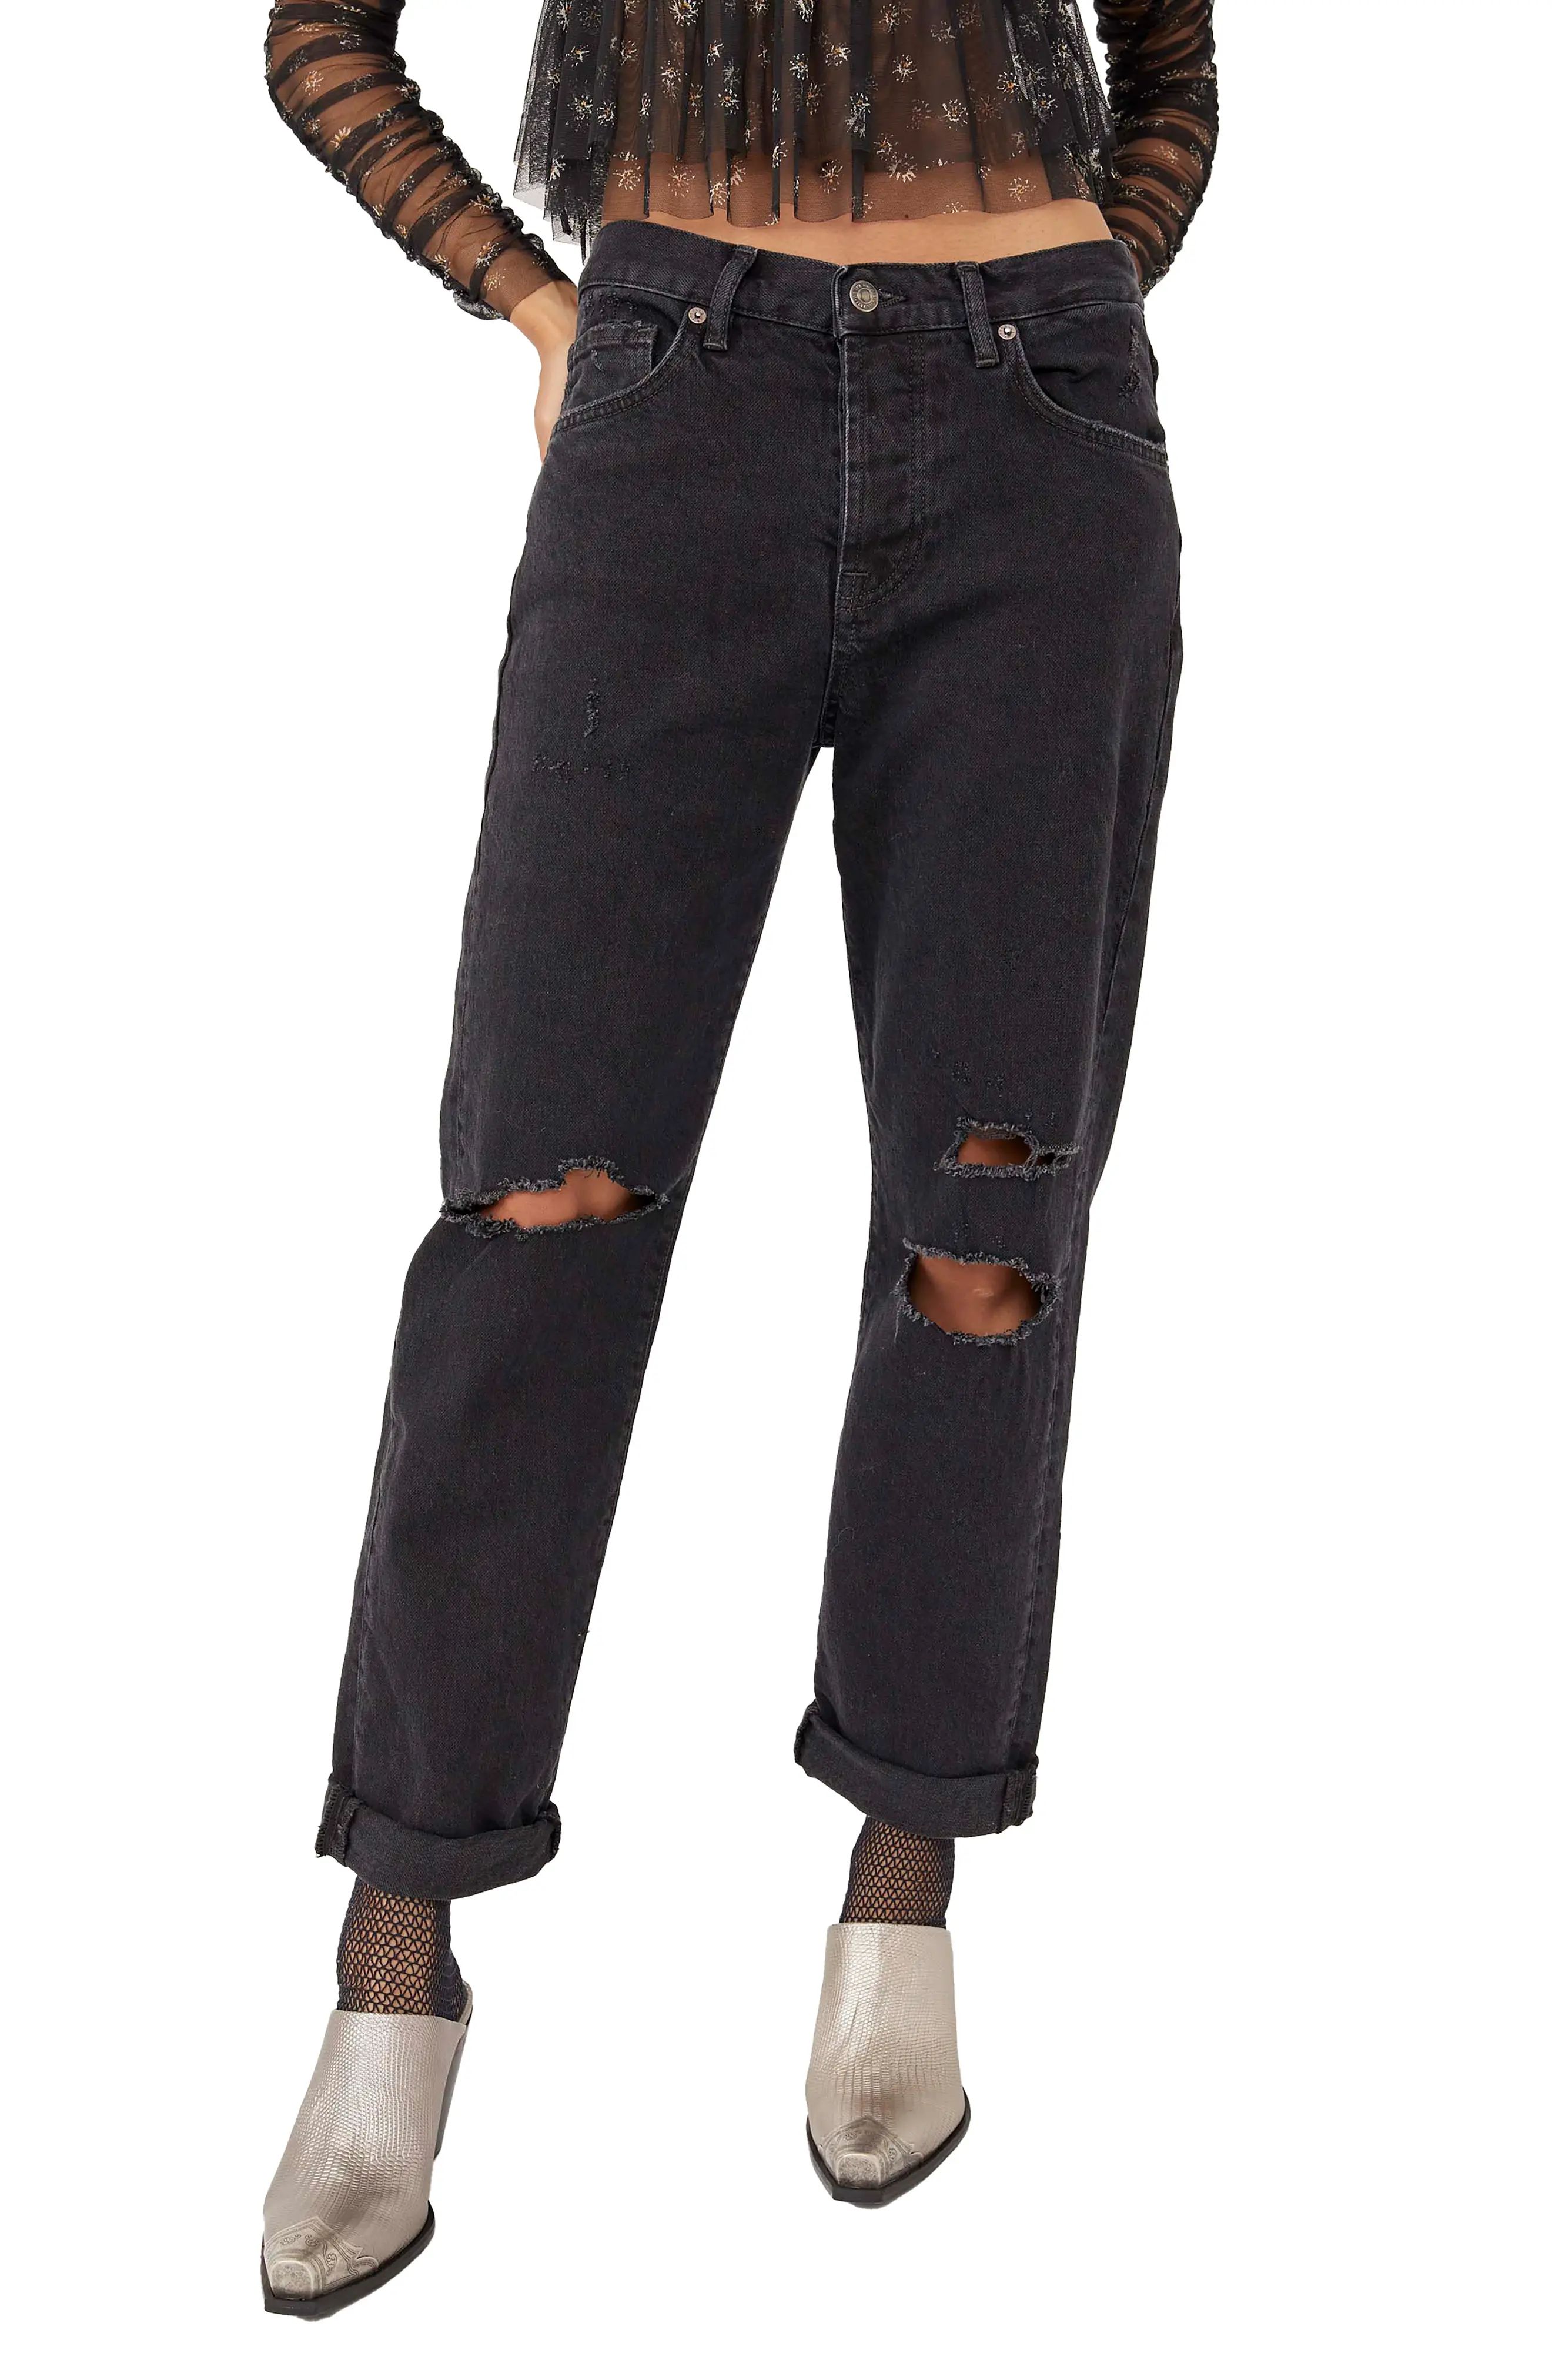 Free People Bren Distressed Boyfriend Jeans, Size 26 in Black at Nordstrom | Nordstrom